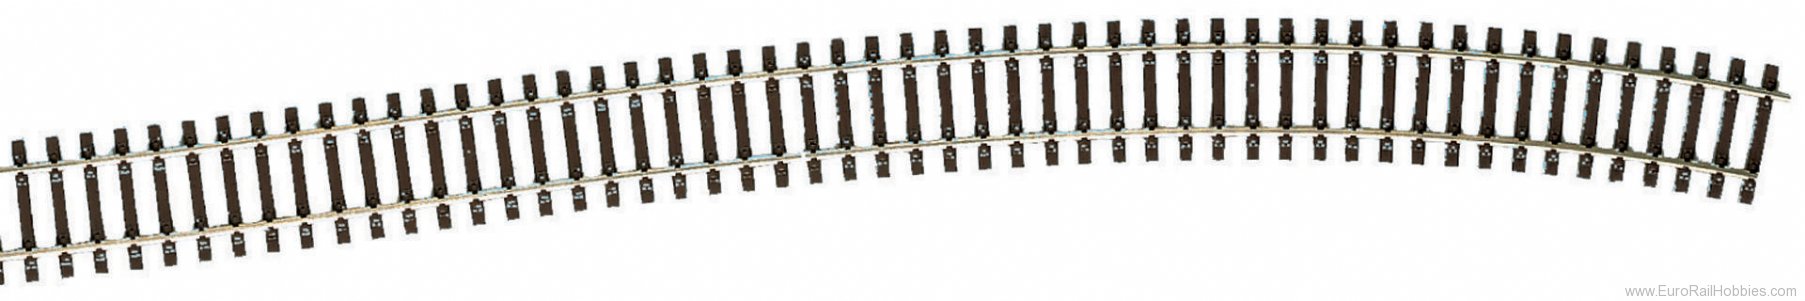 Roco 42400 H0/83 Flextrack with Wooden Ties (1)